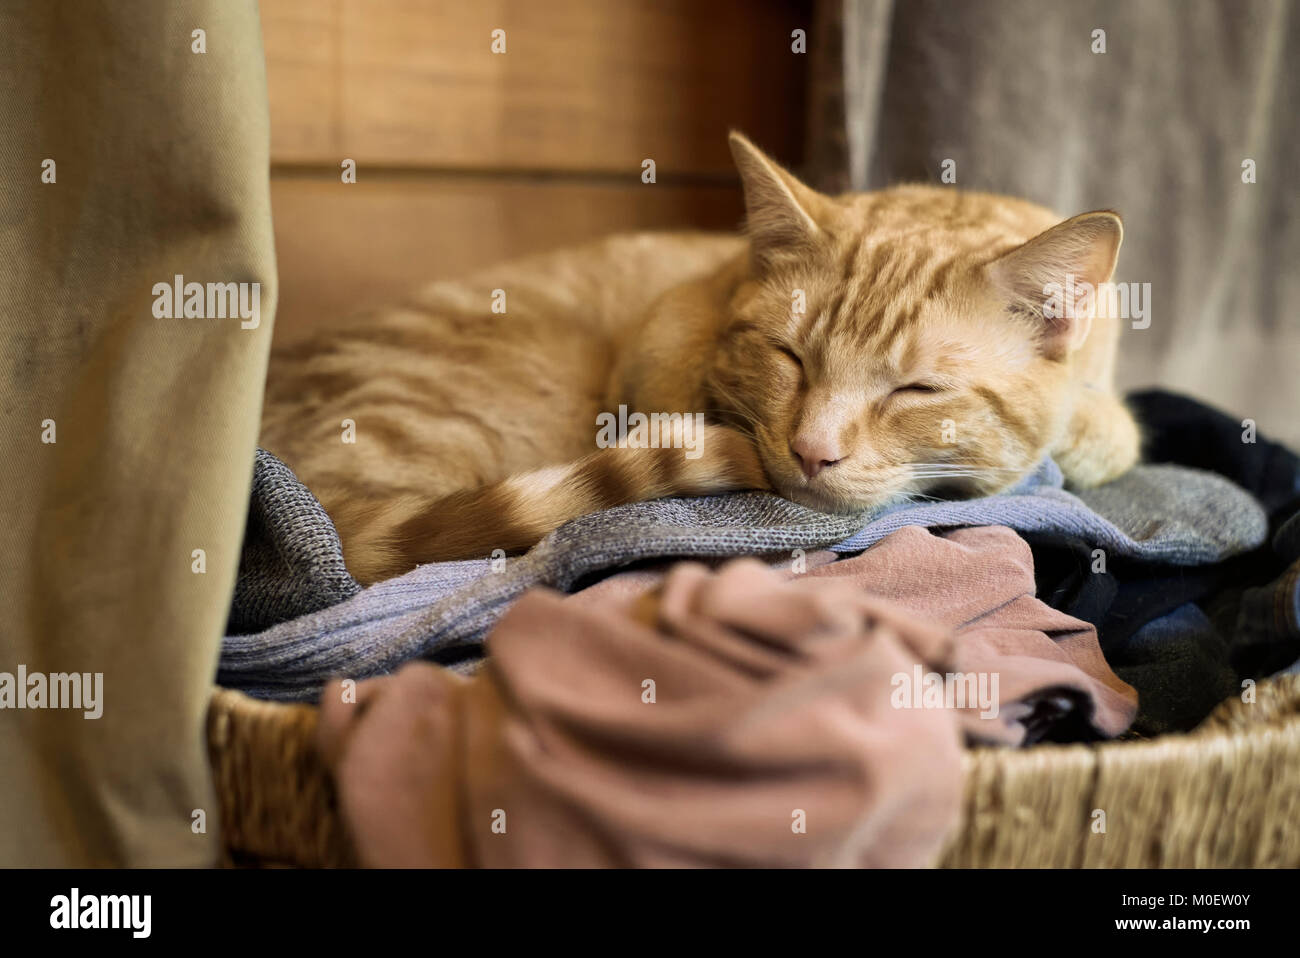 Orange kitten sleeping on laundry basket full of clothes. Can asleep on hamper. Stock Photo